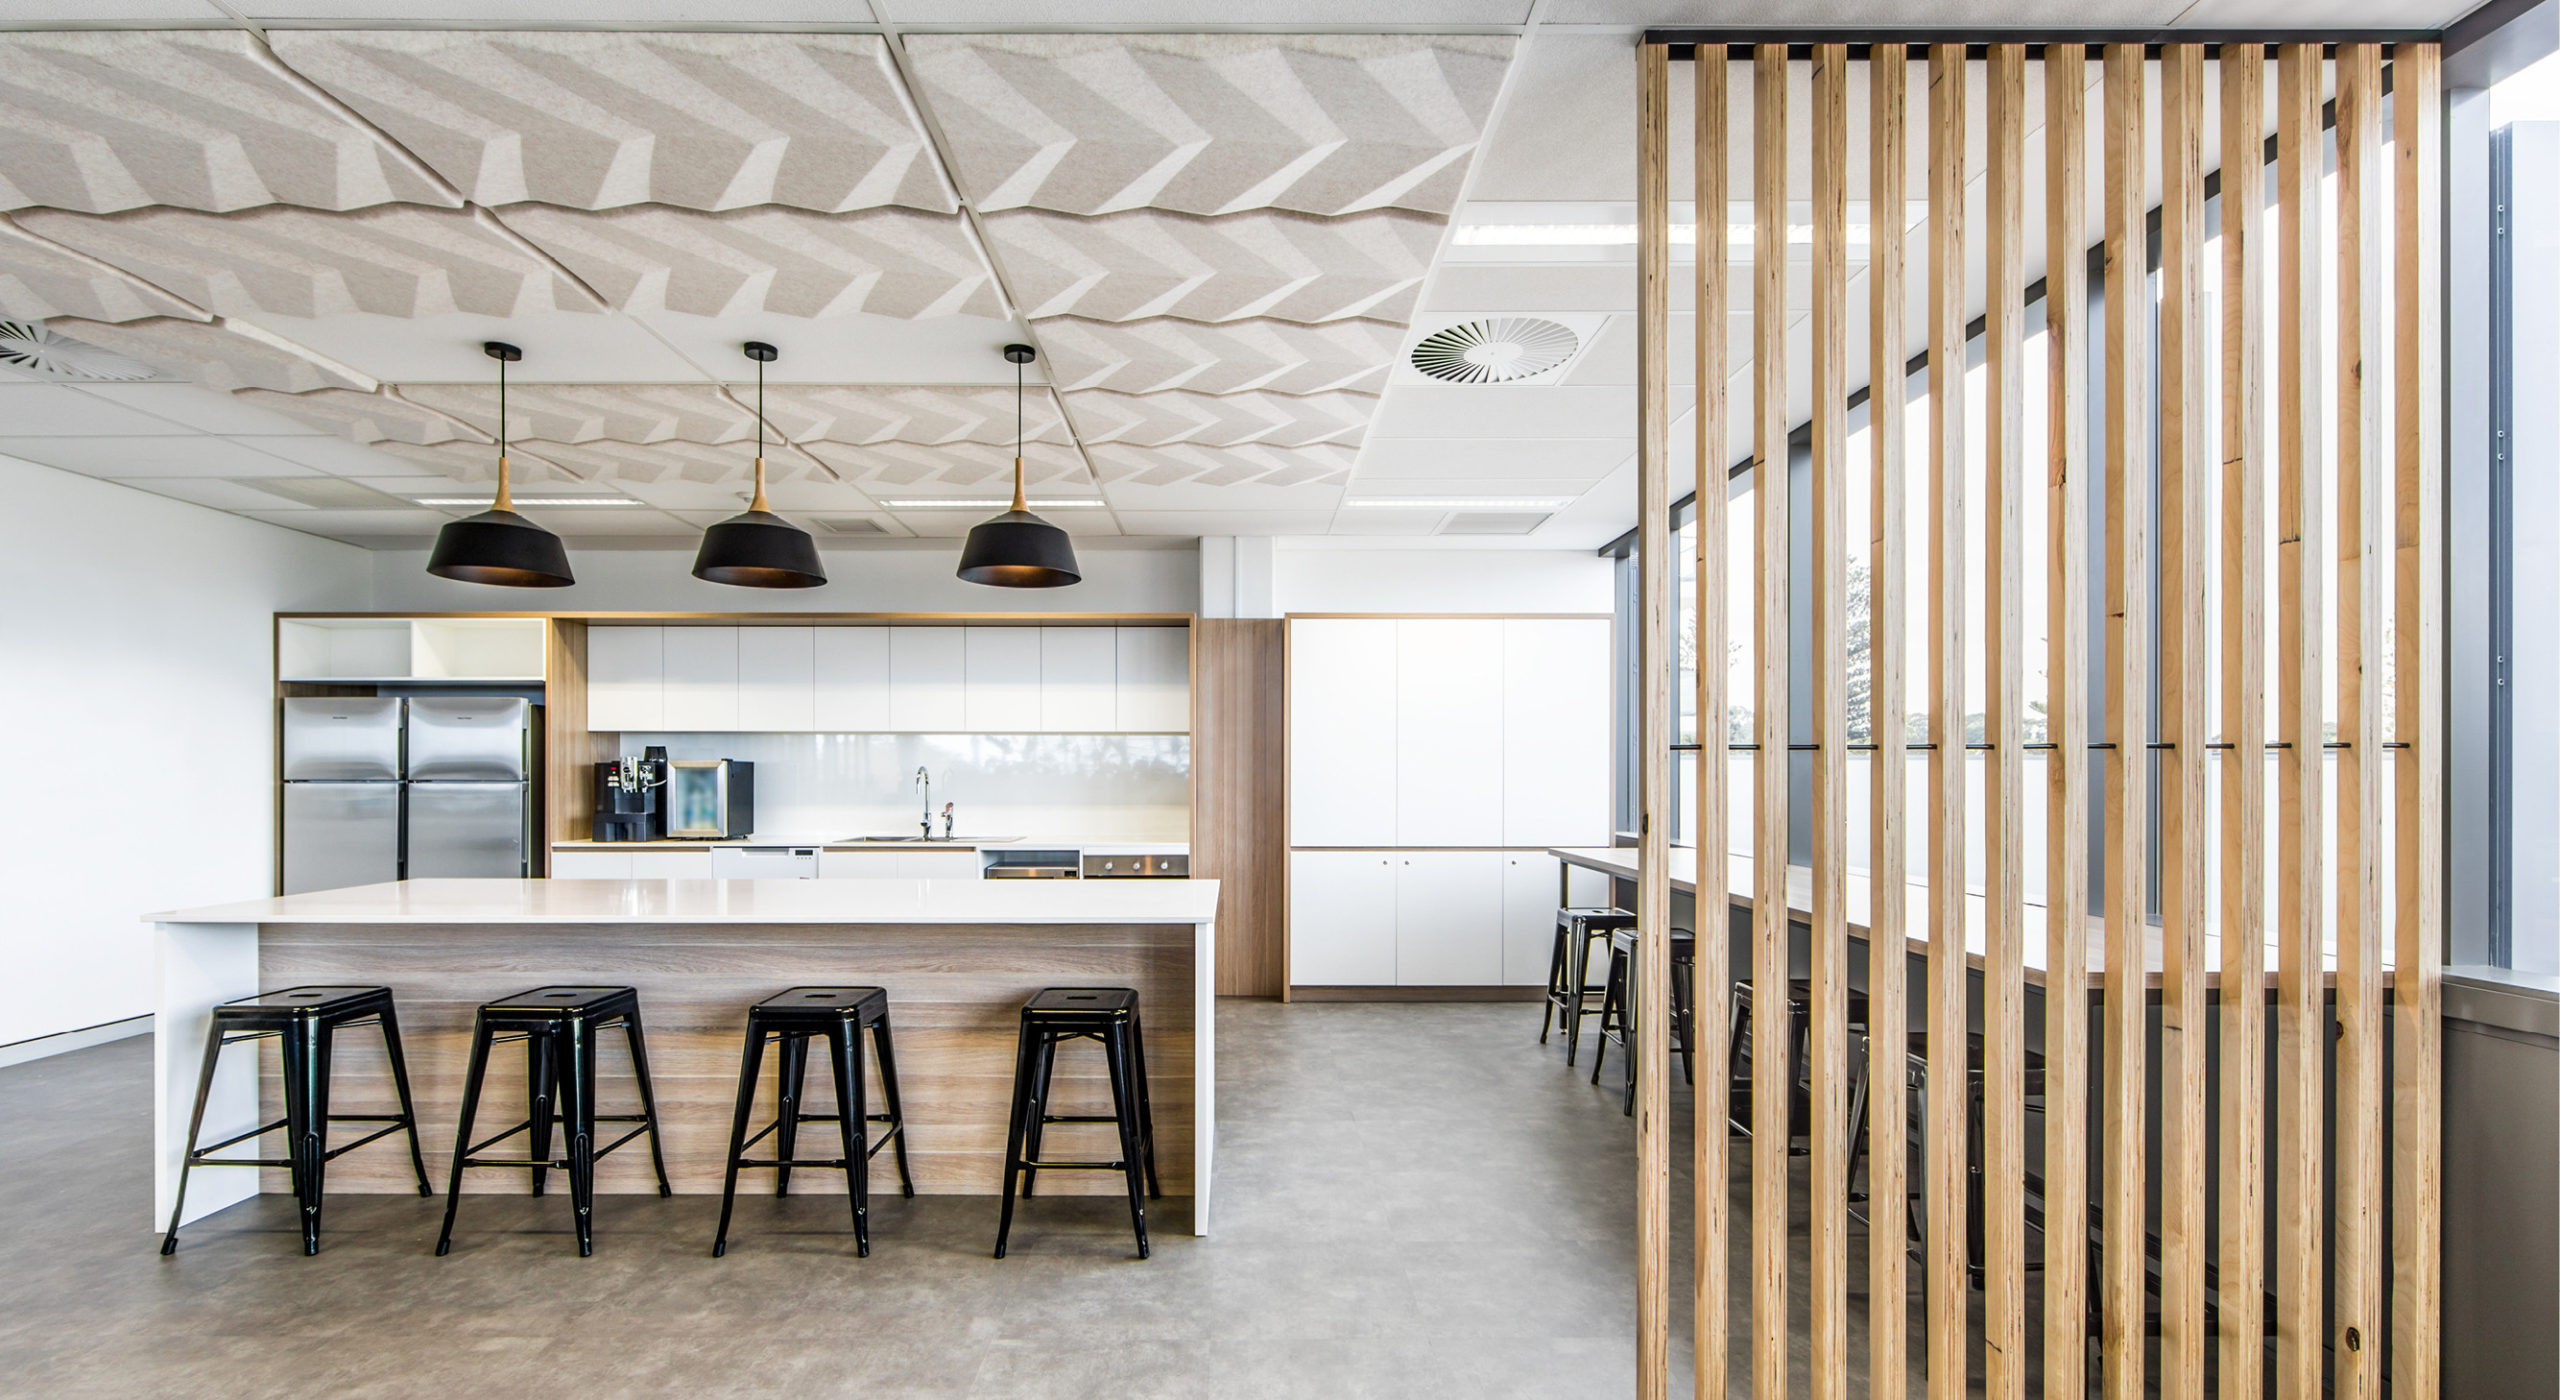 beige sound-absorbing ceiling tiles above kitchen area